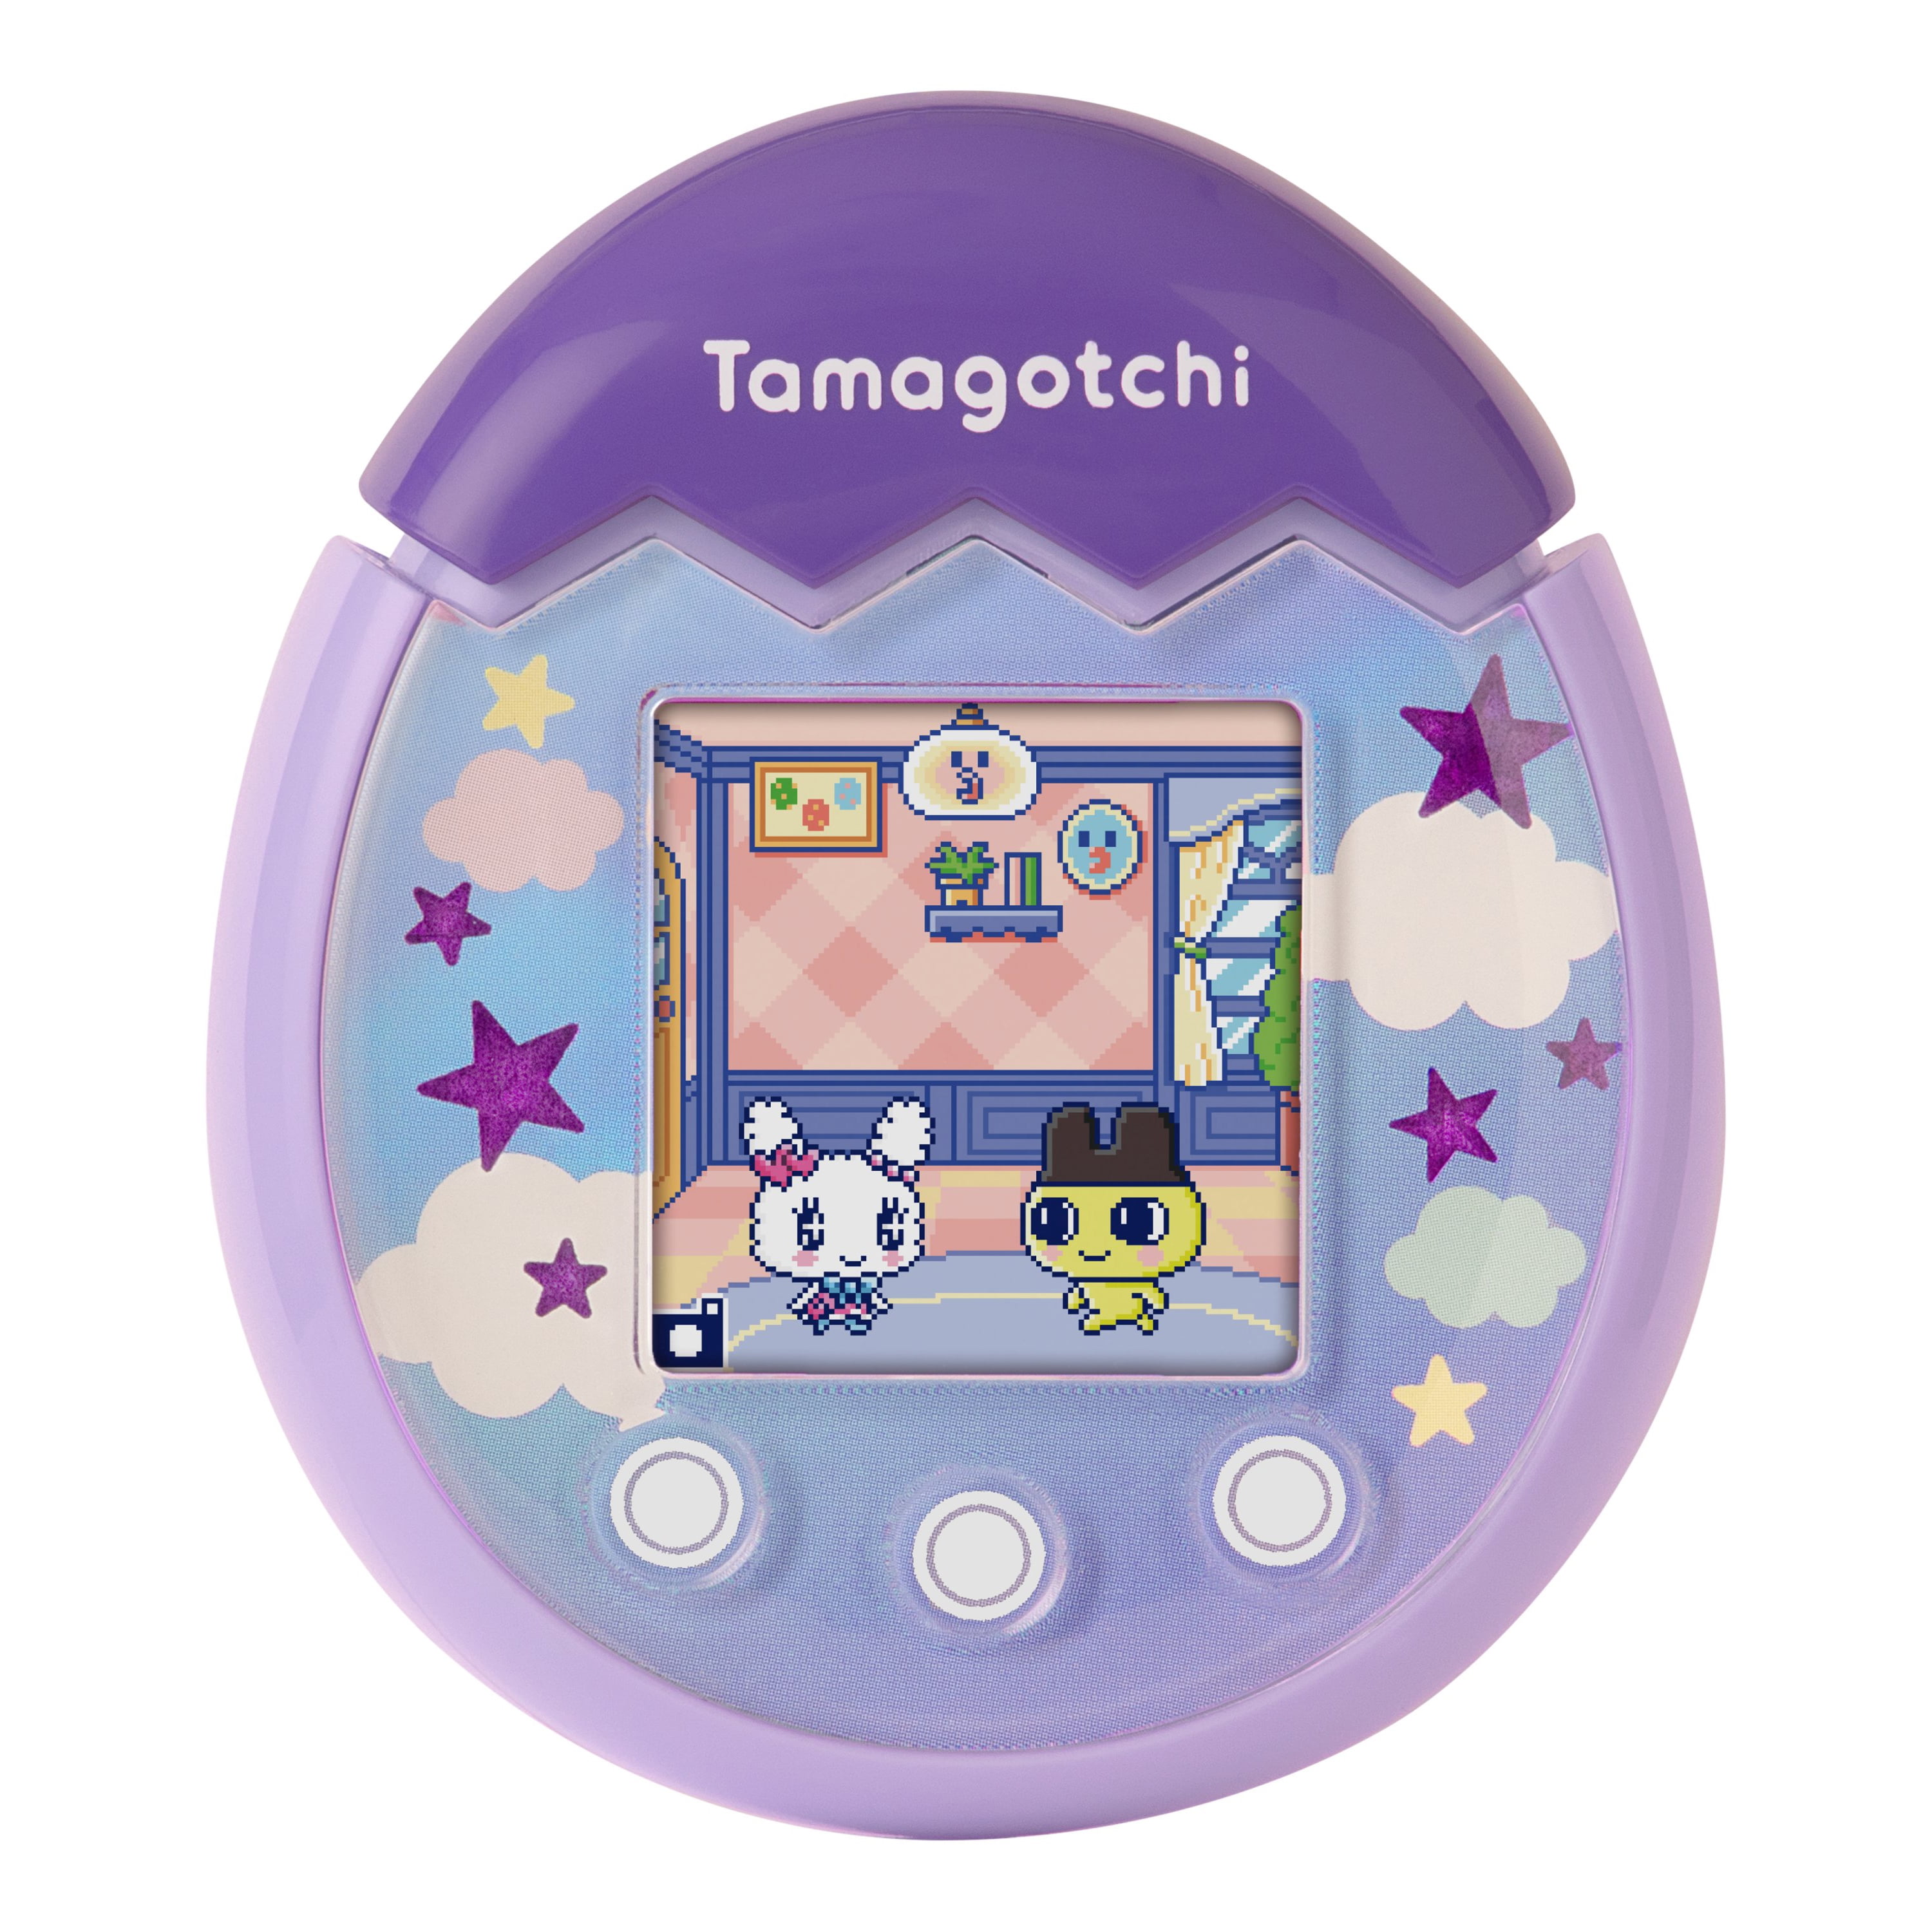 New Bandai Tamagotchi Pix The Next Generation Of Interactive Virtual Pet 